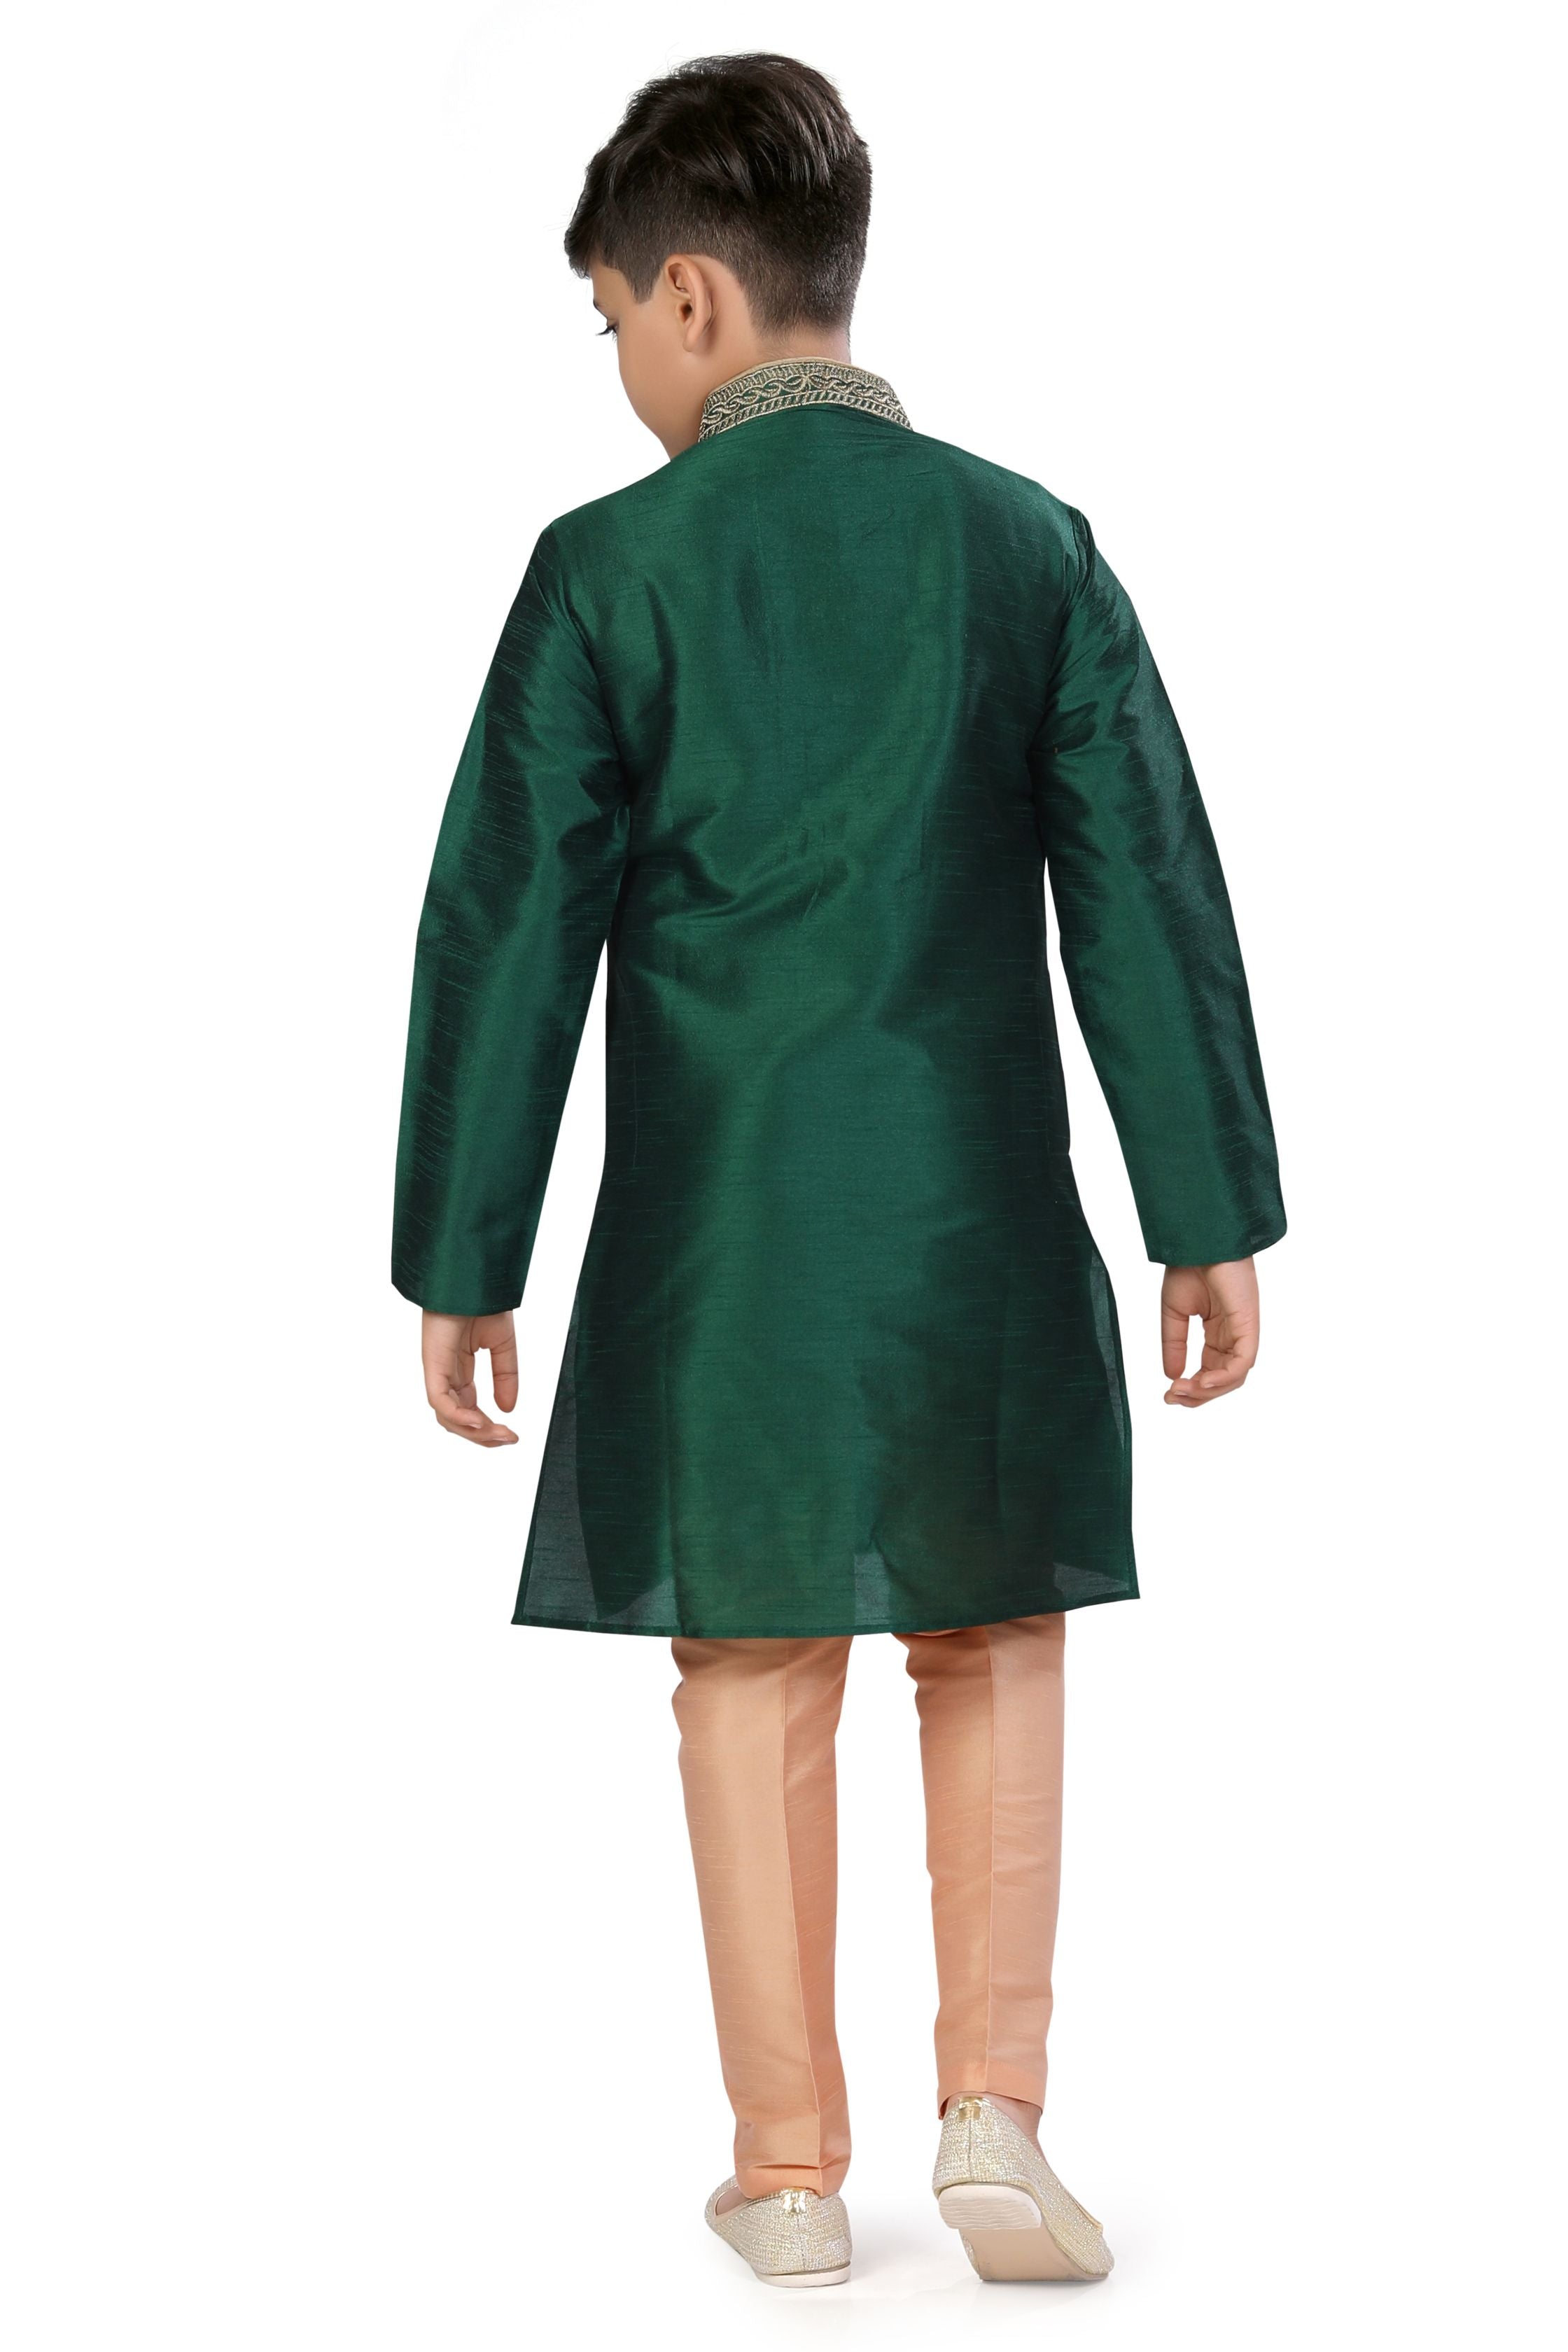 Boys Dupion Silk Embroidered Kurta Pajama Set in Bottle Green Colour - Premium kurta pajama from Dapper Ethnic - Just $55! Shop now at Dulhan Exclusives